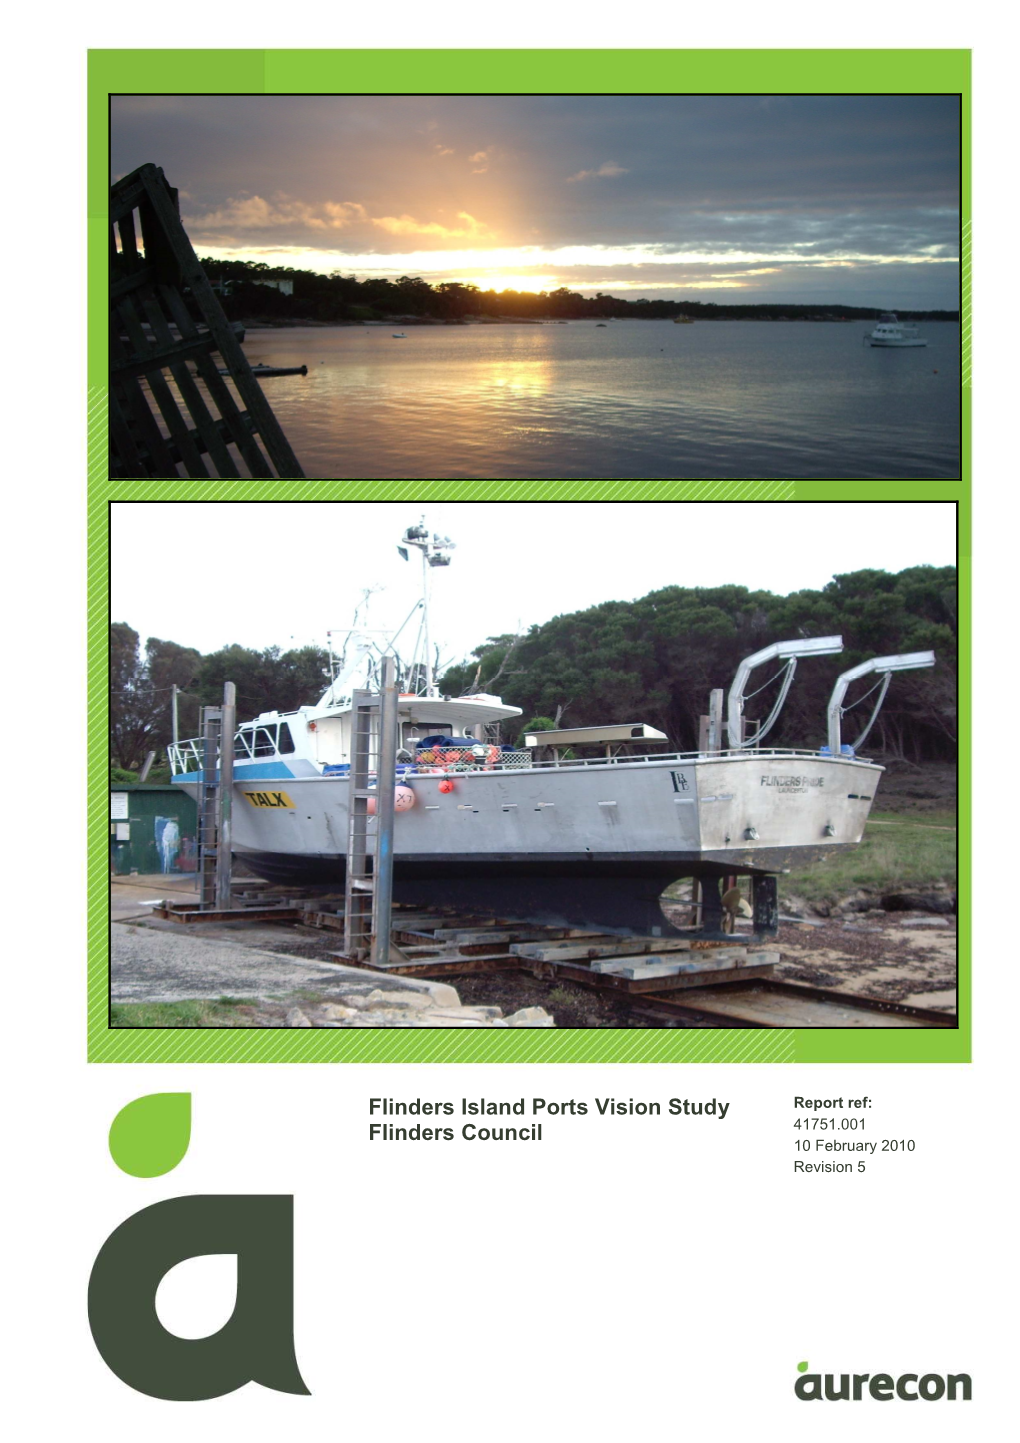 February 2010, Flinders Island Ports Vision Study